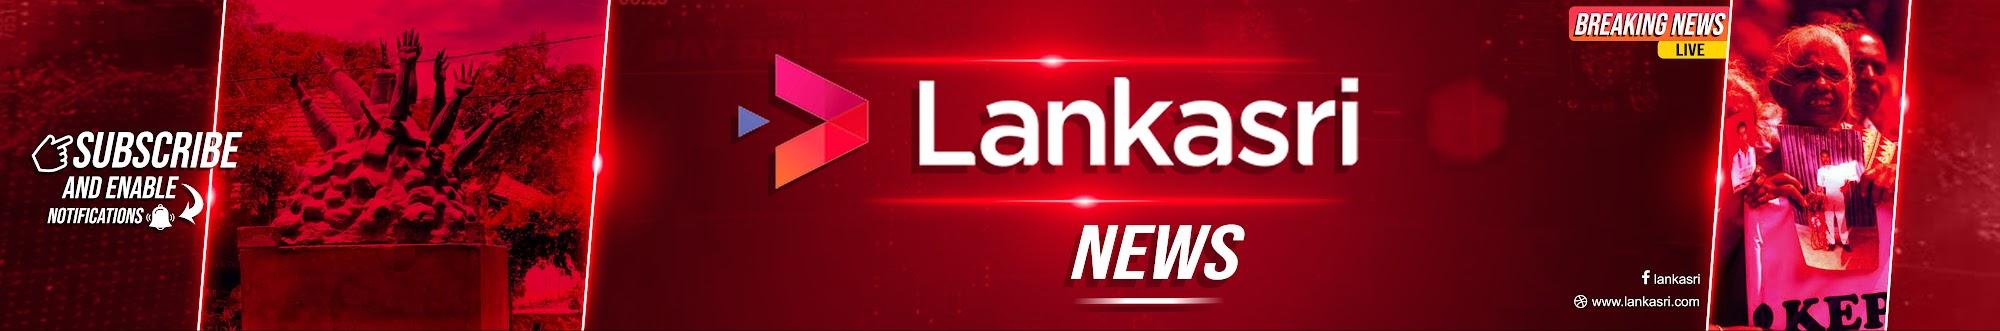 Lankasri News